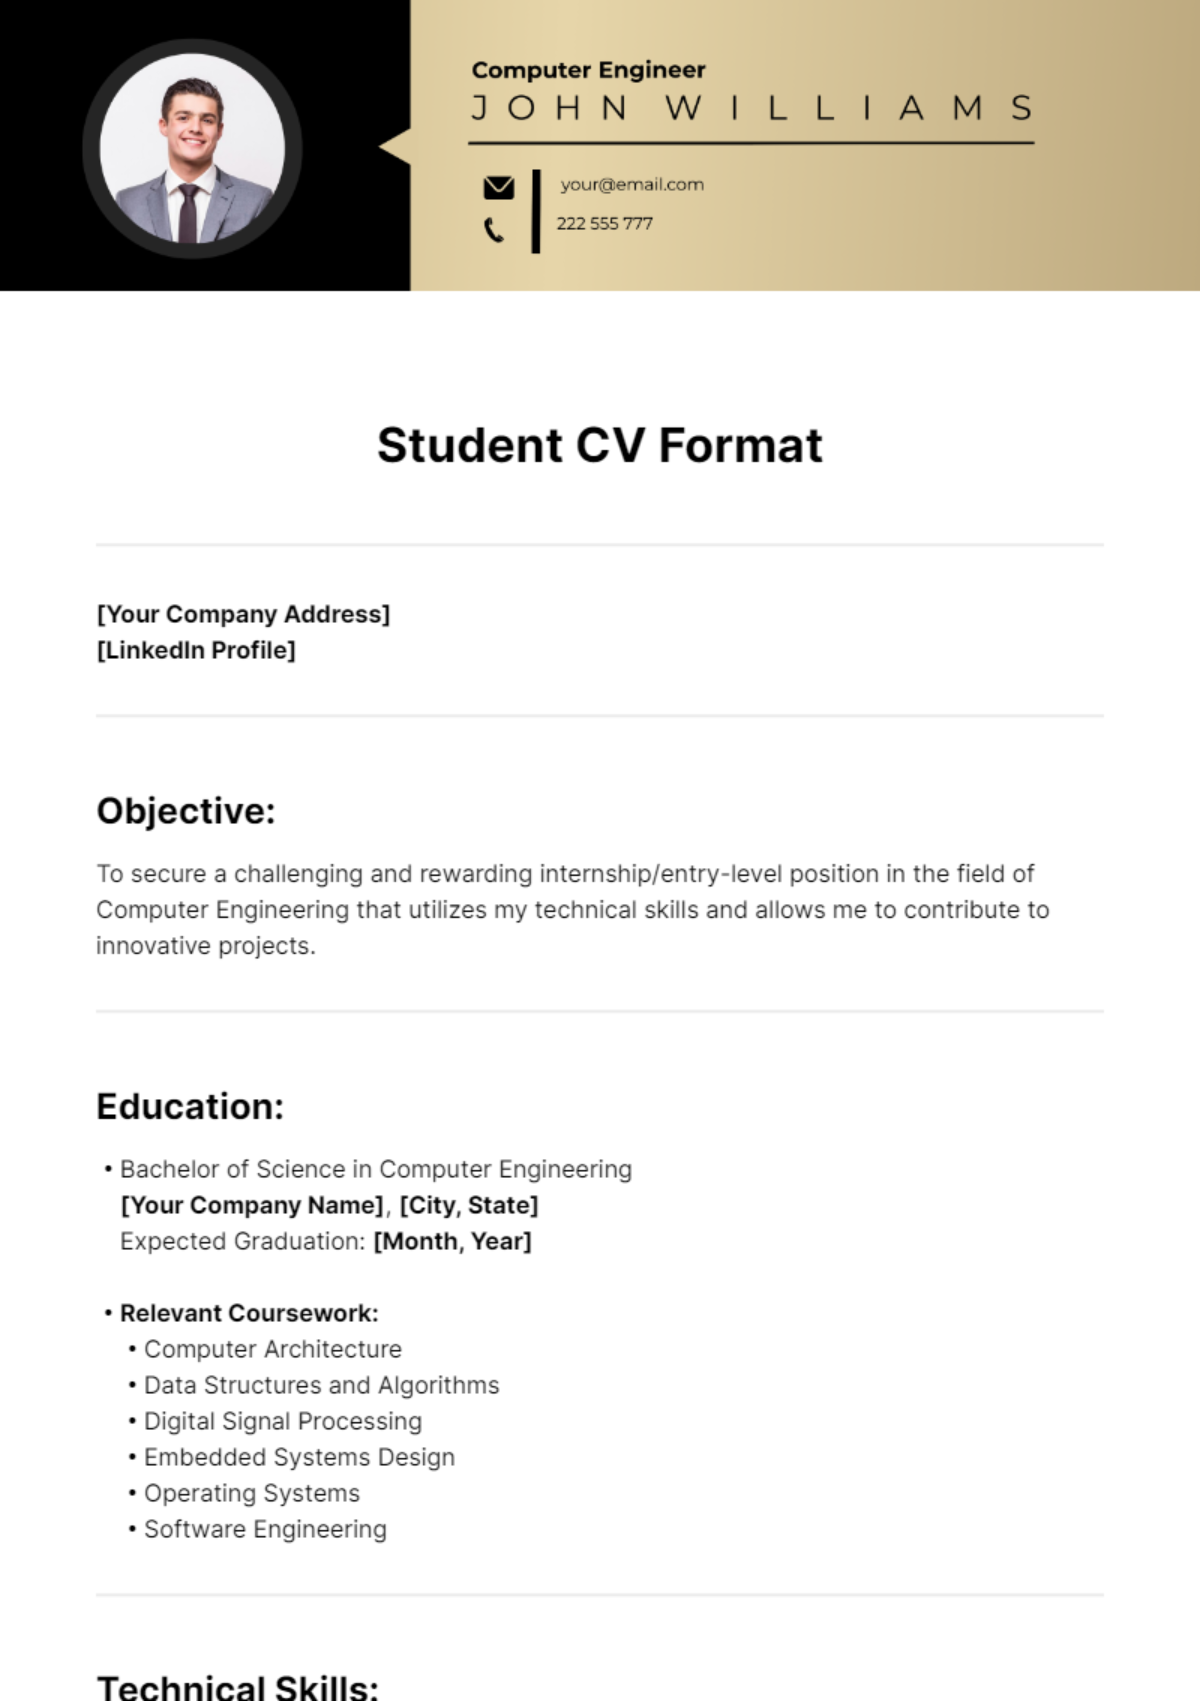 Student CV Format Template